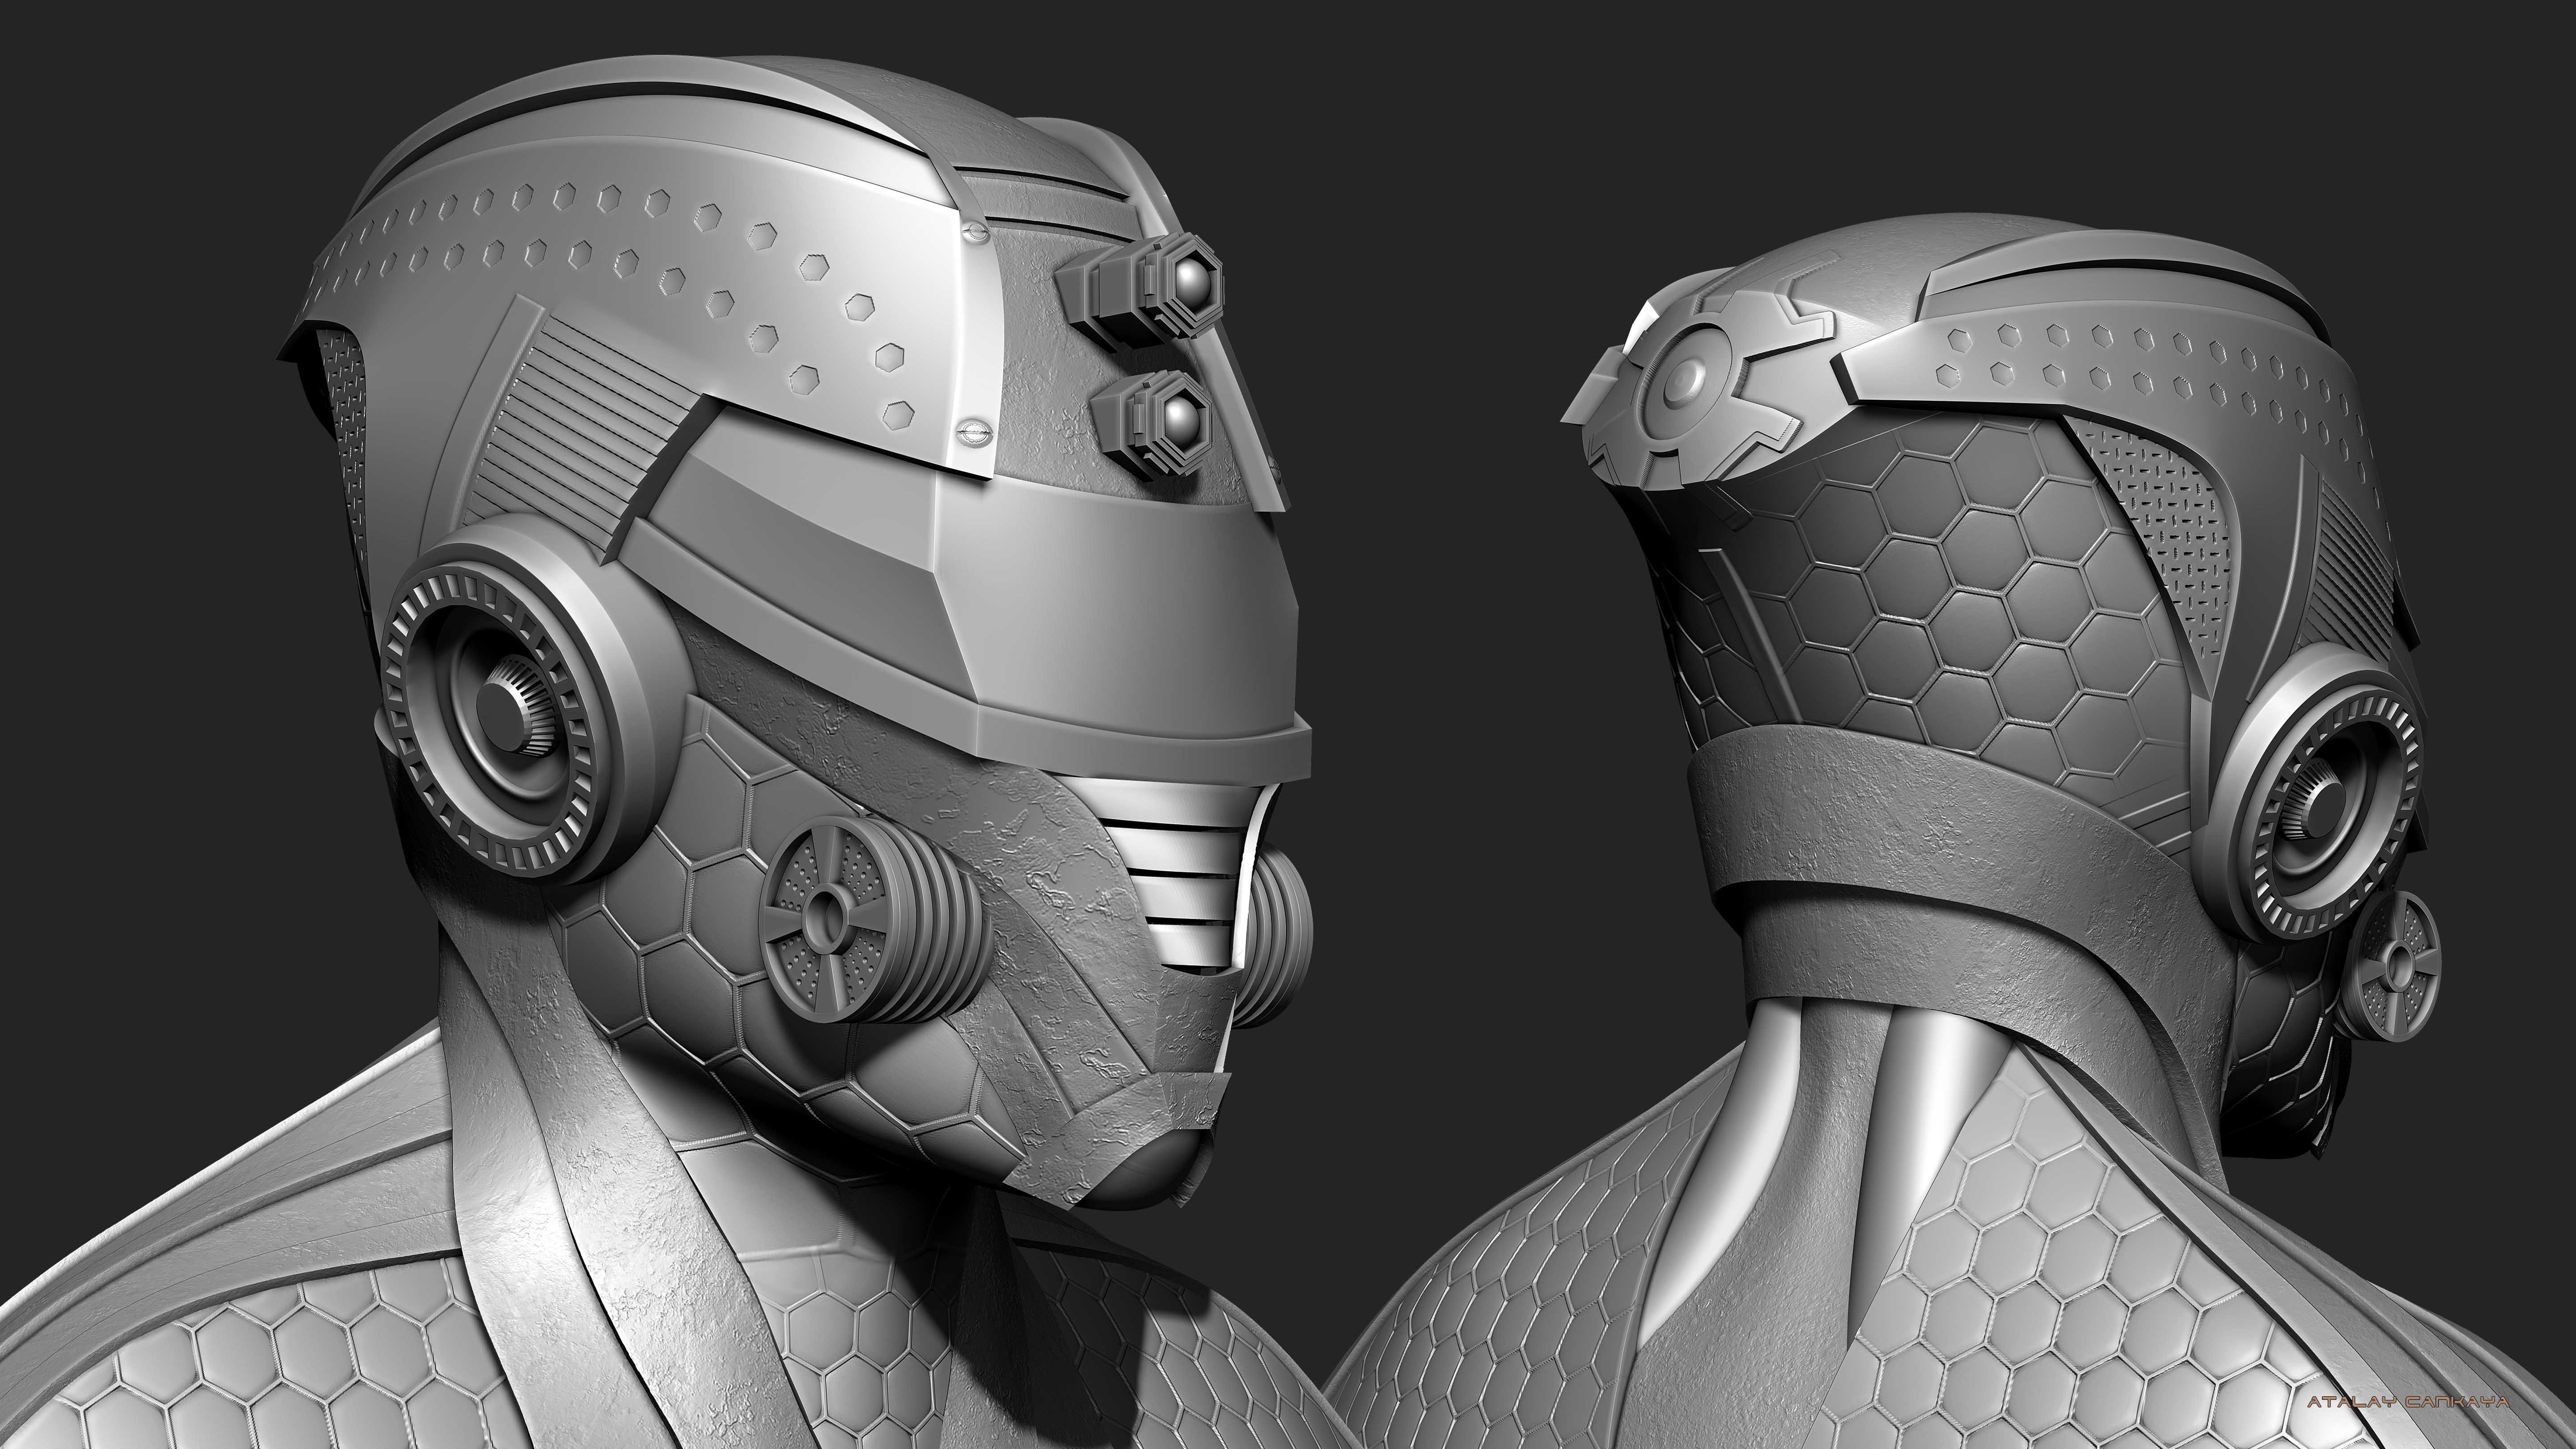 Futuristic Soldier Helmet - Clay 1.jpg